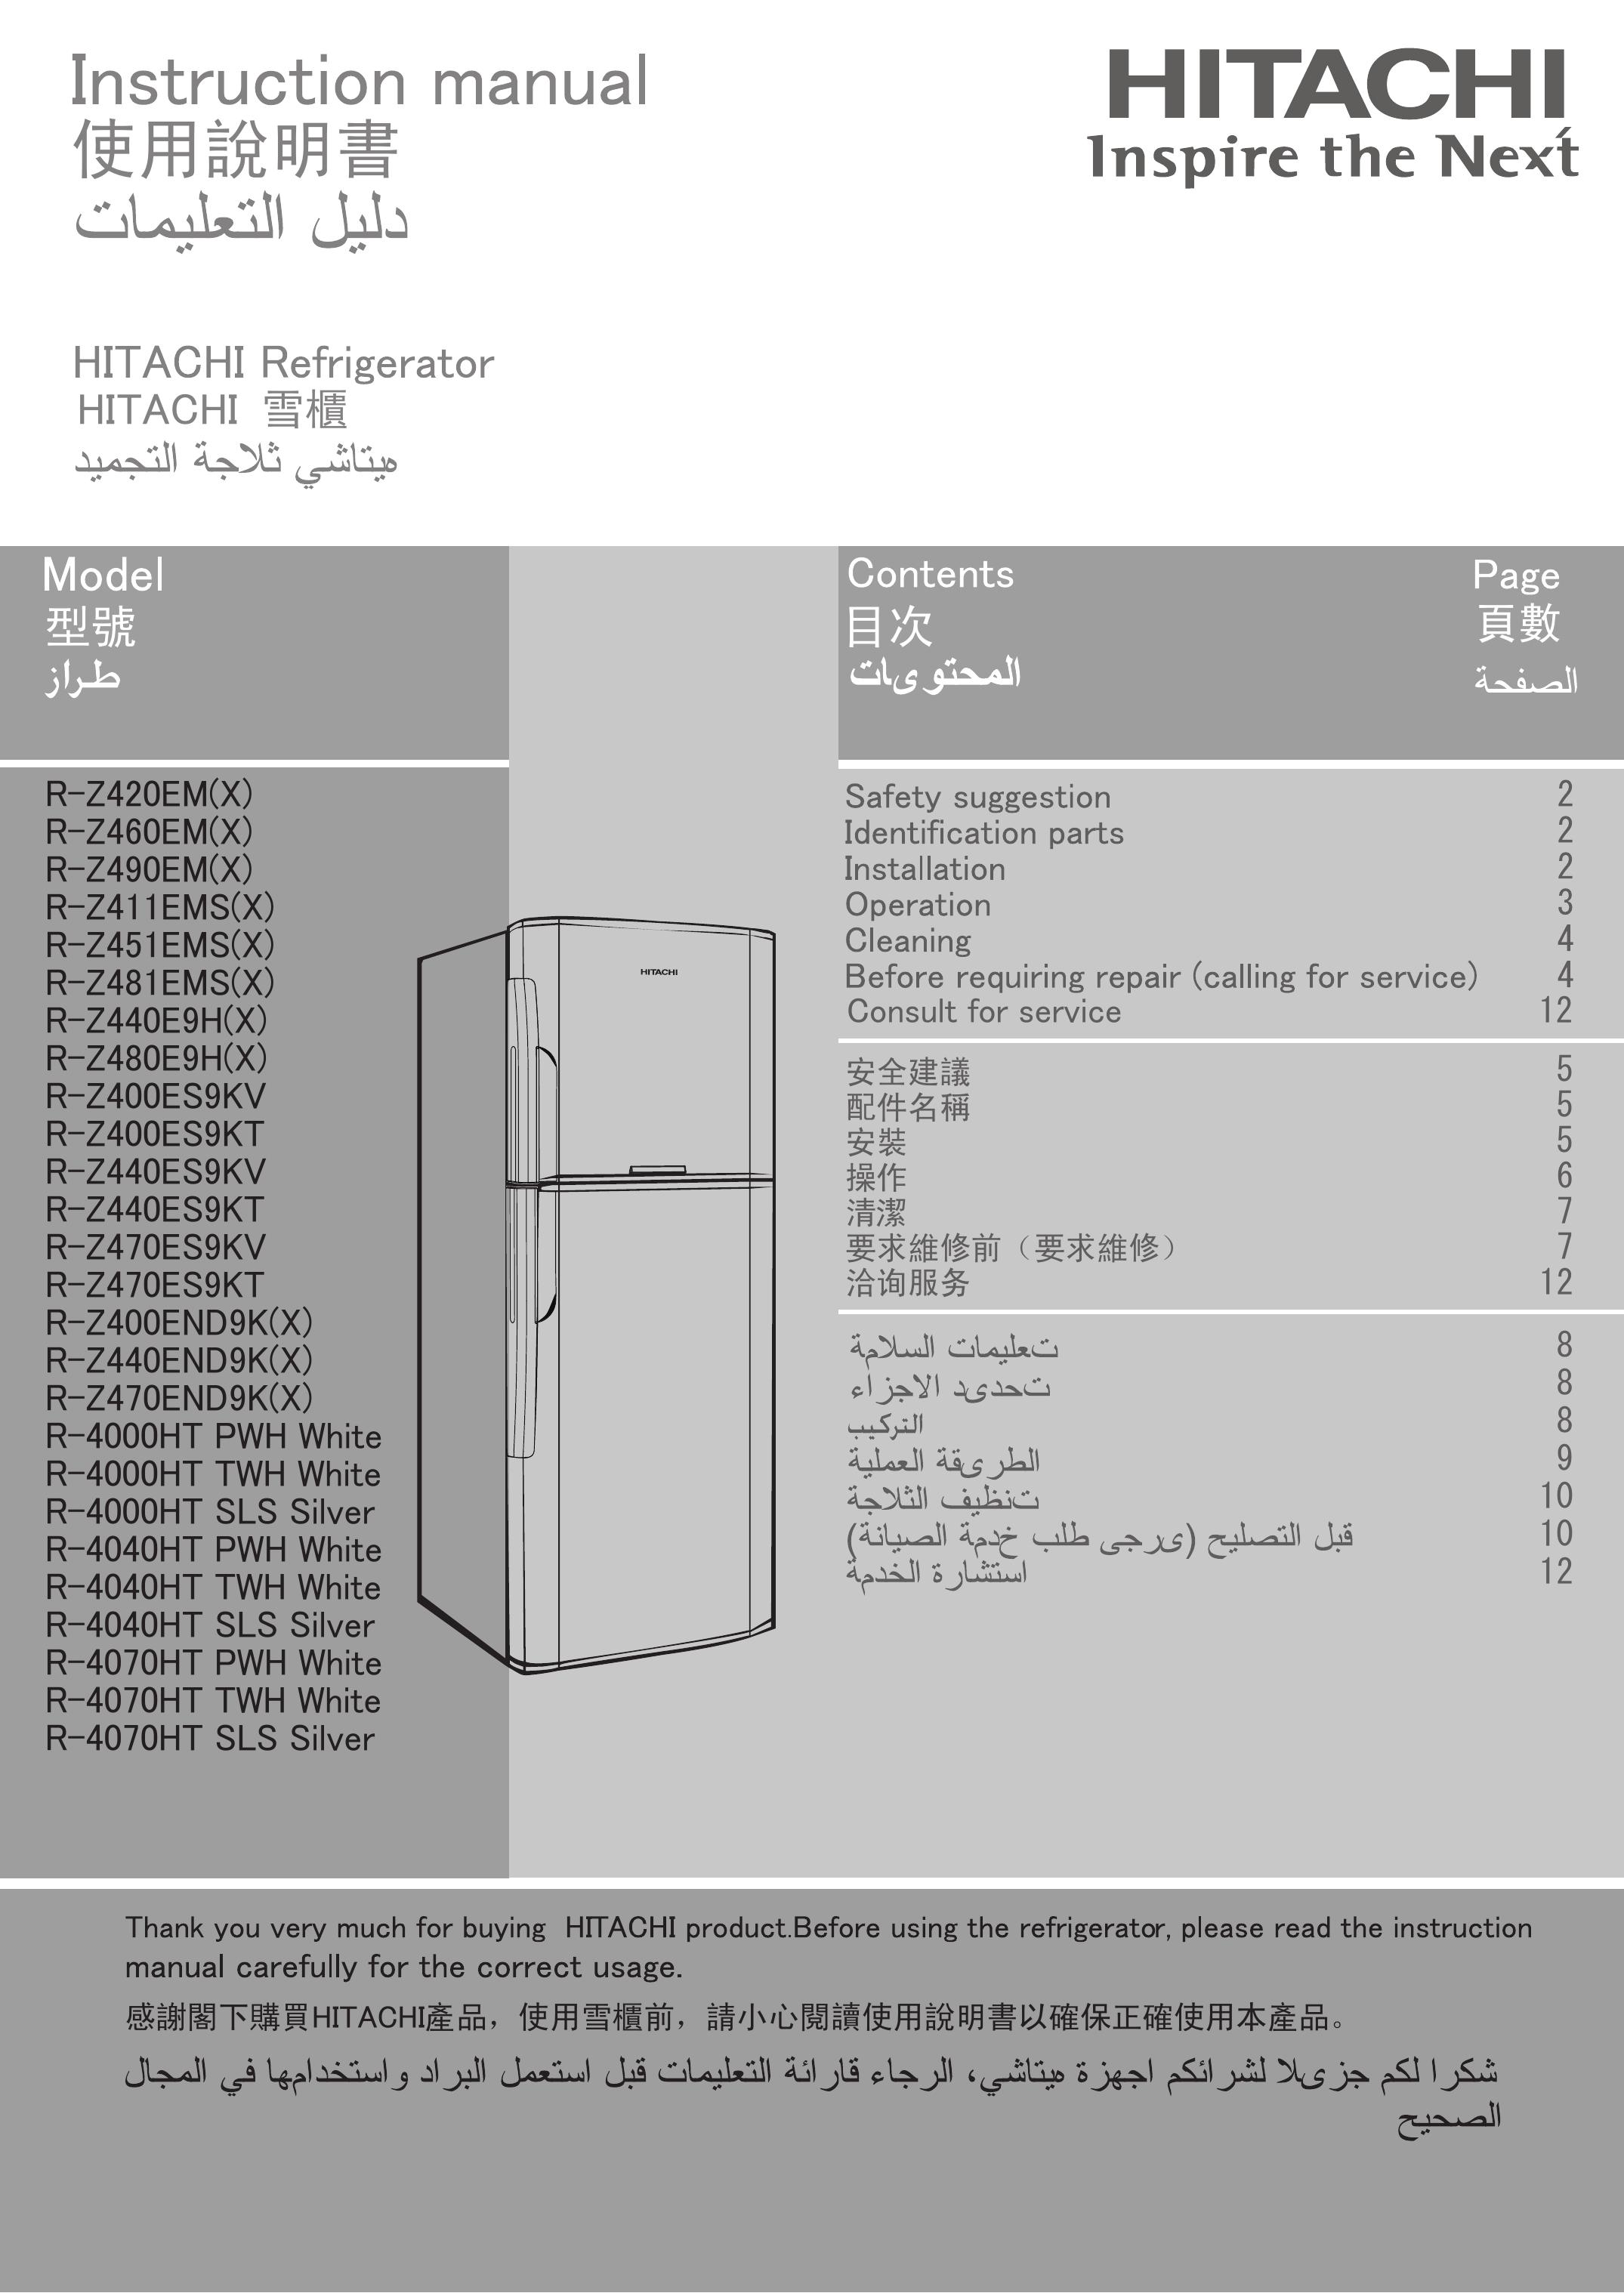 Hitachi R-4040HT TWH White Refrigerator User Manual